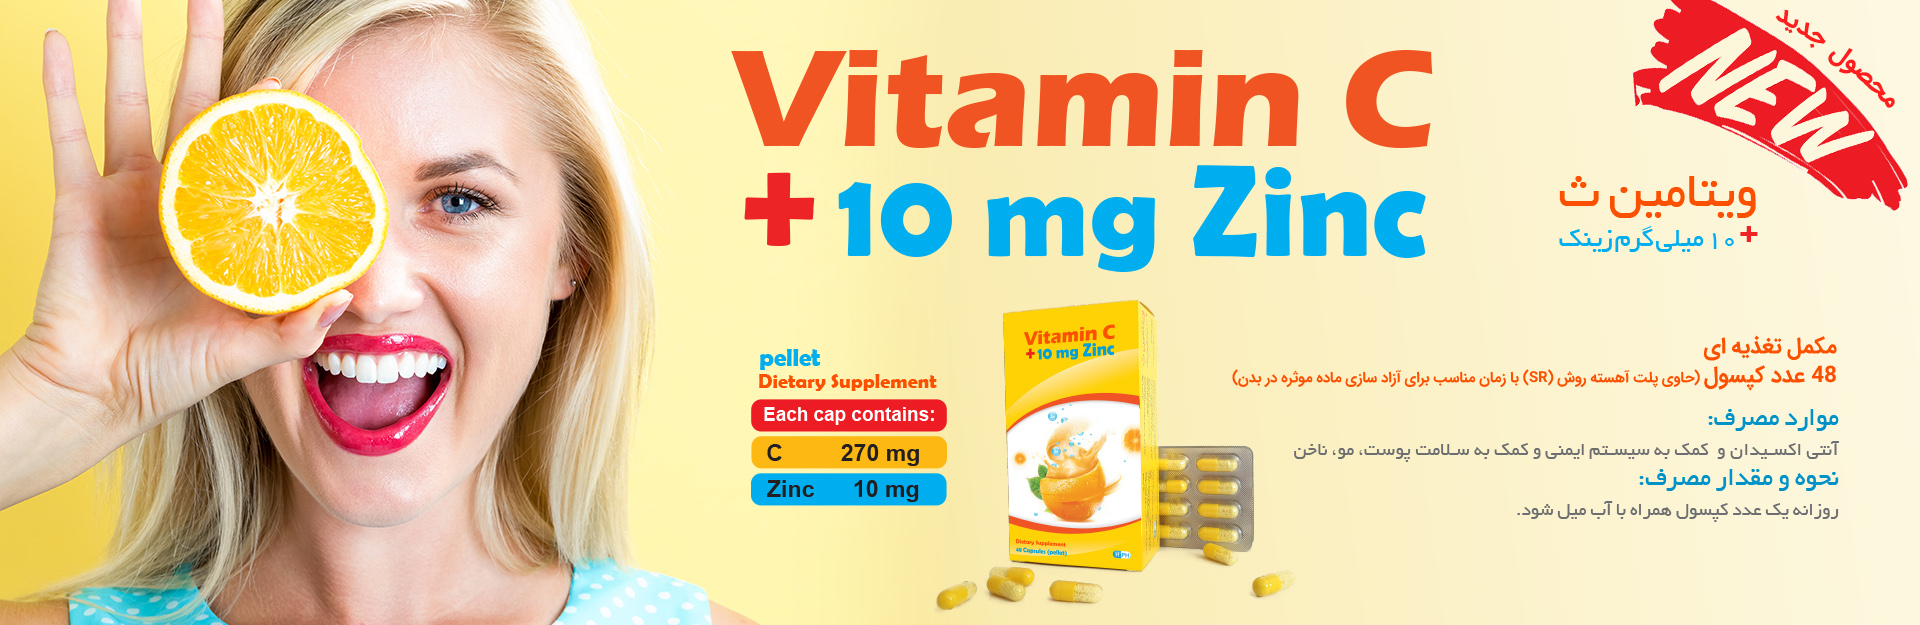 vitamin-c-سلامتی-سلامت-تندرستی-تغذیه-ایران-ویتامین-ث-طب-مشاوره-طبیعت-زندگی-درمان-رژیم-زندگی-پوست-کیفیت-مدرنتناسب-اندام-حال-خوب-انرژی-مثبت-copy خانه